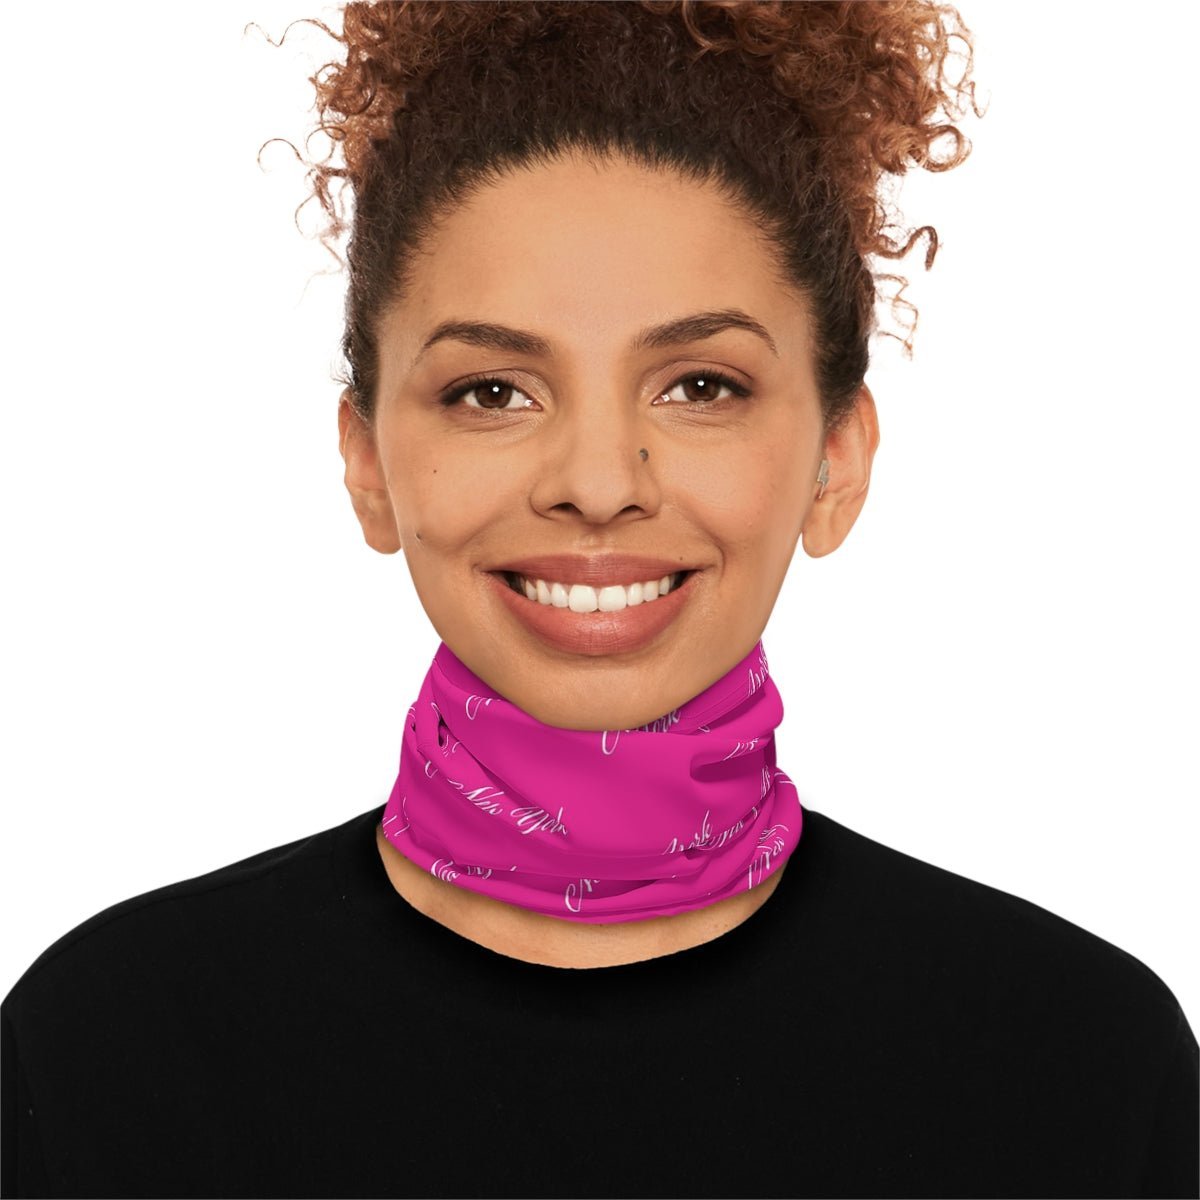 Fashionable Neck Gaiter For Women Girls Men - Multi-Purpose UPF 50+ UV+ Full Face Mask Buff Balaclava Pink NY - Studio40ParkLane